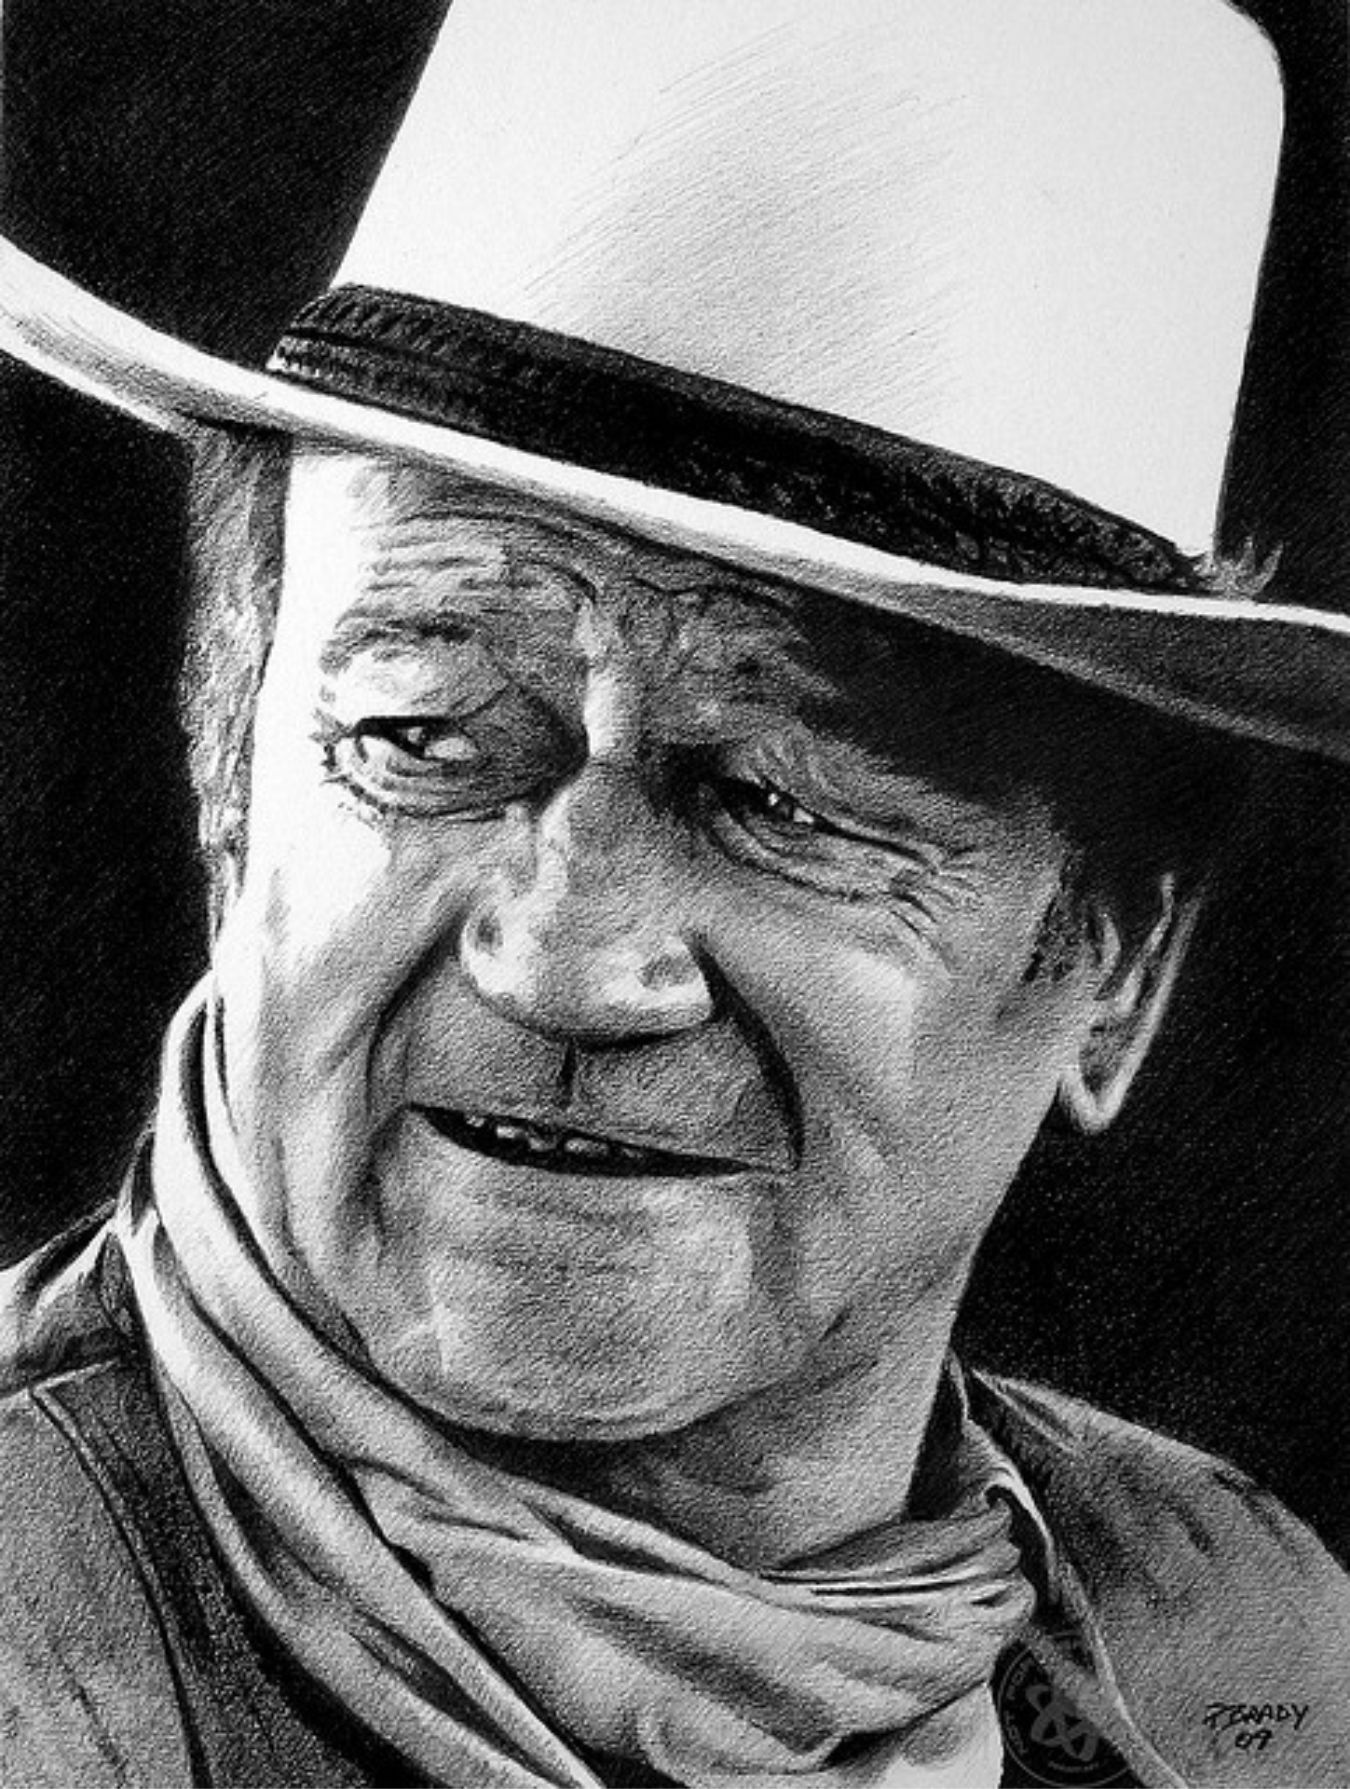 John Wayne … Iconic Images Part 1 | My Favorite Westerns
